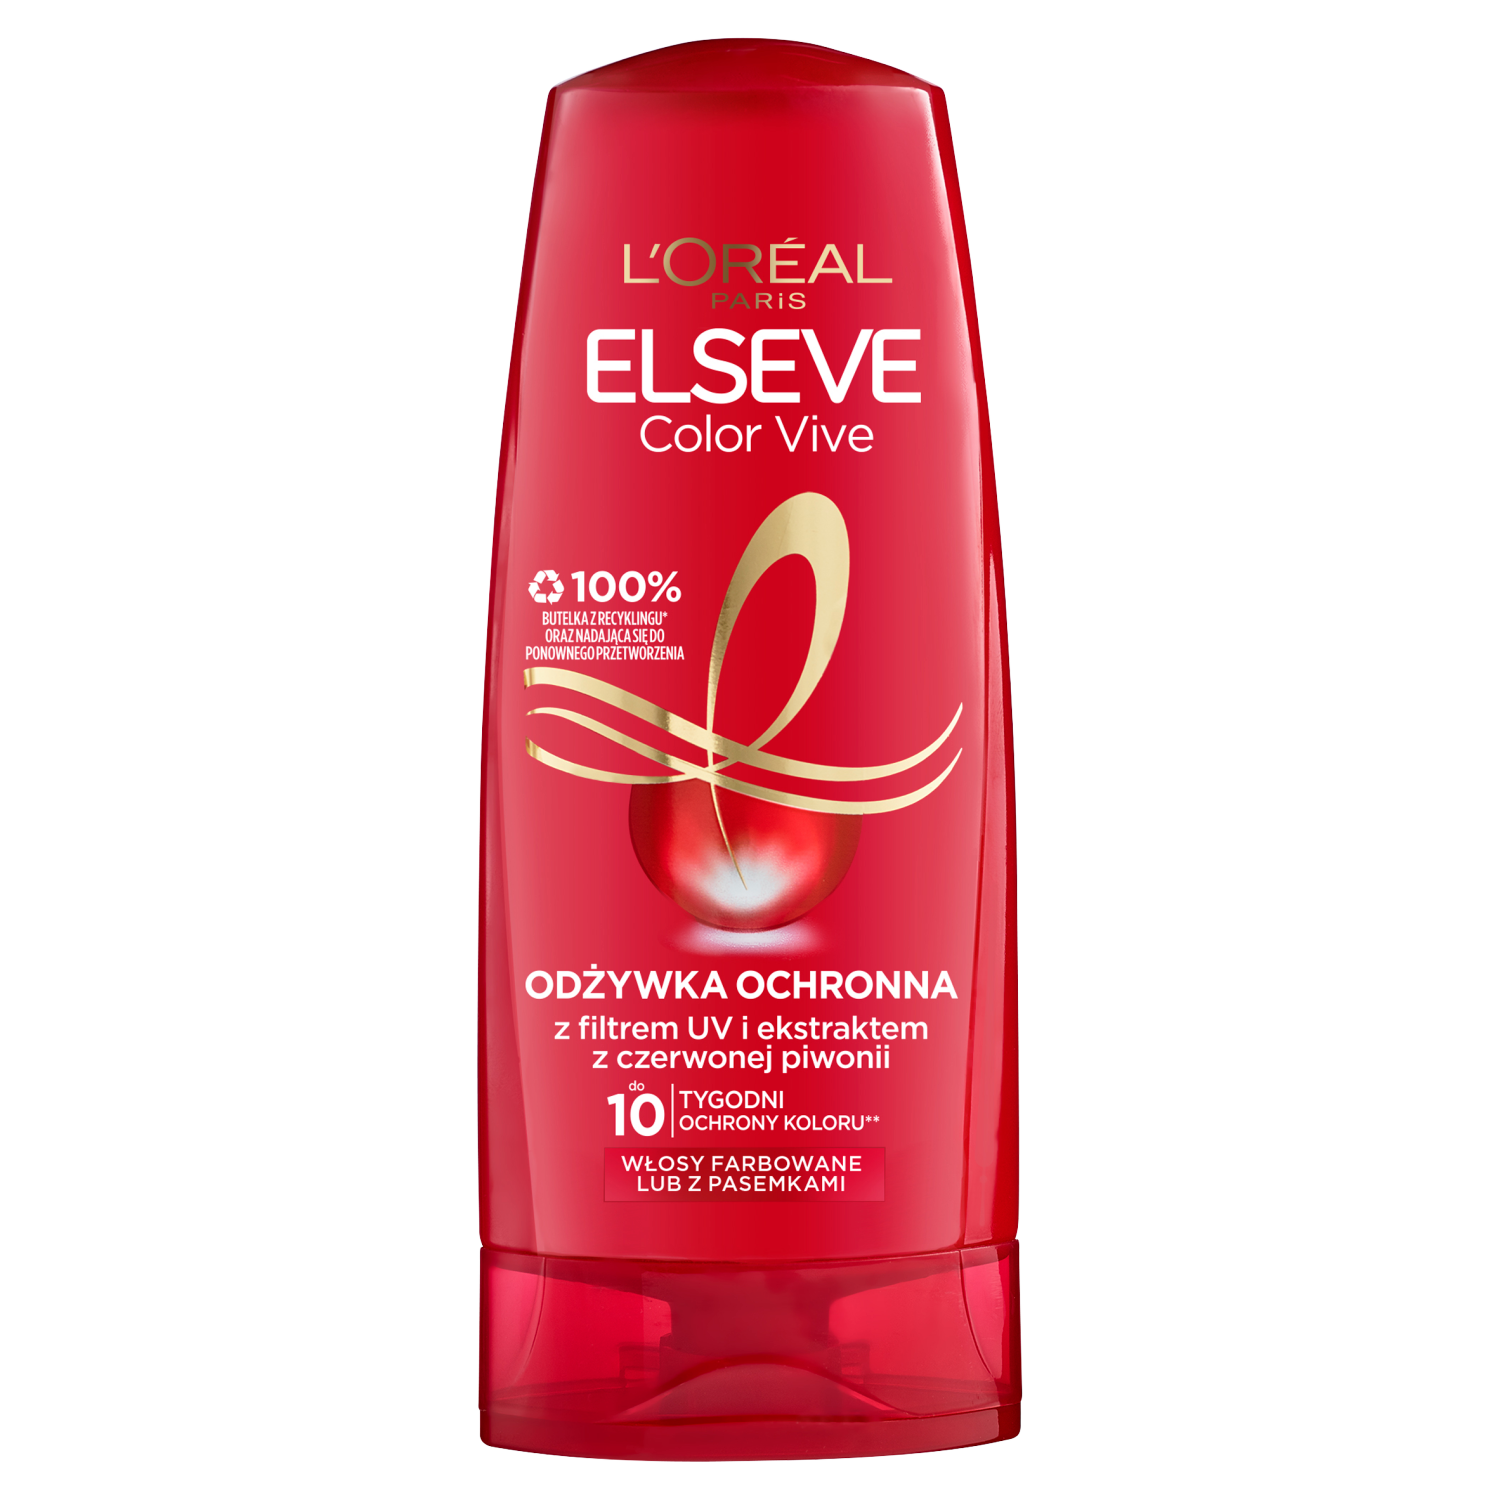 L'Oréal Paris Elseve Color-Vive защитный кондиционер для волос, 200 мл